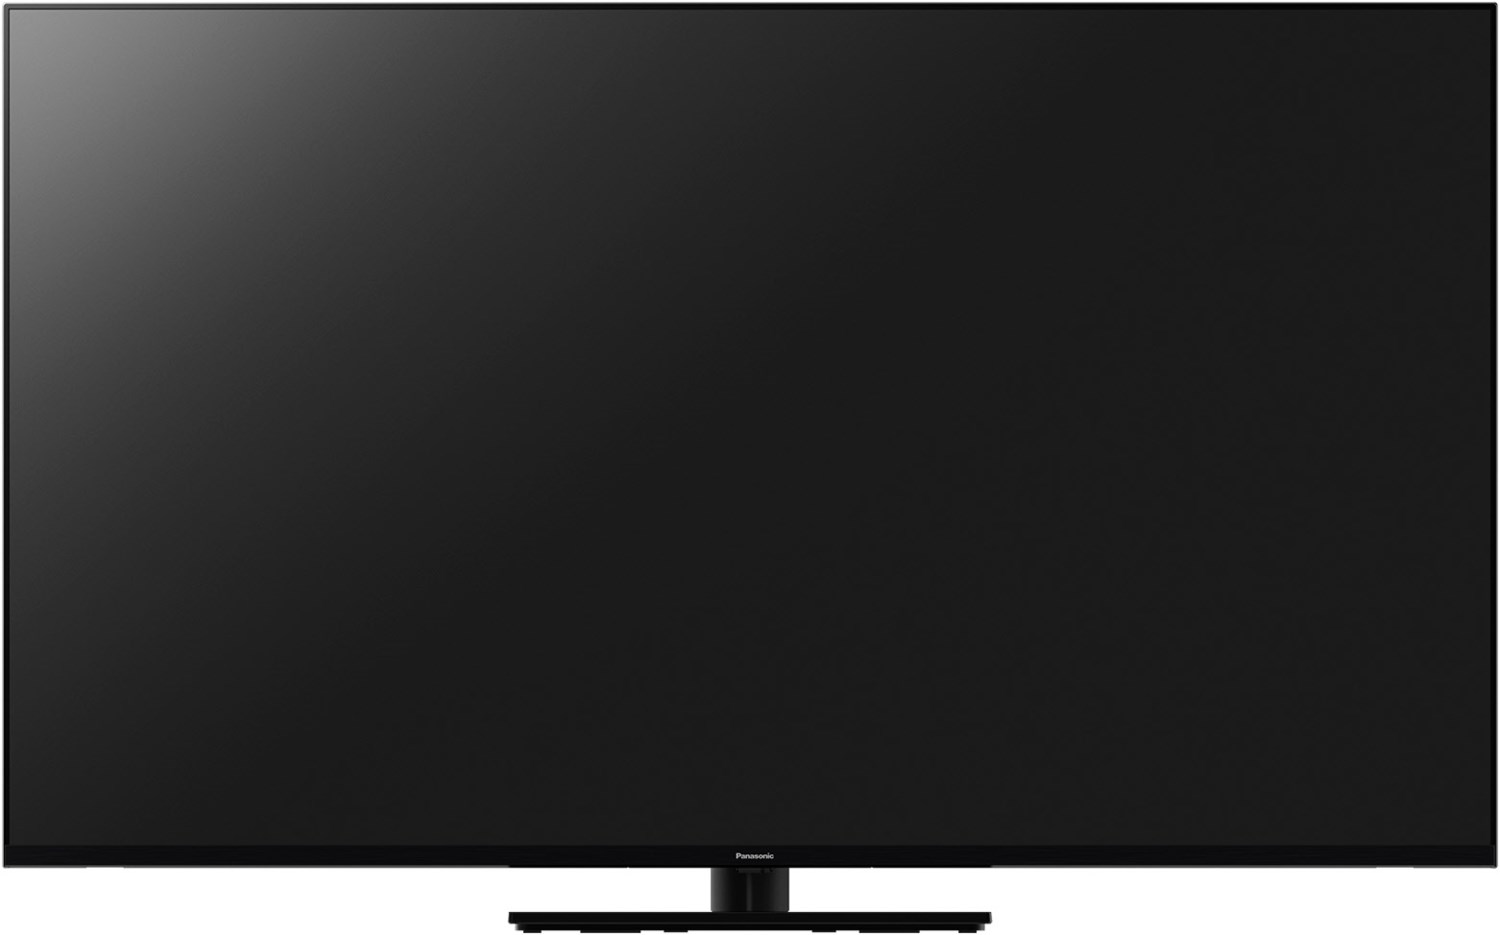 Panasonic 55 Zoll (139 cm) UHD Smart TV schwarz